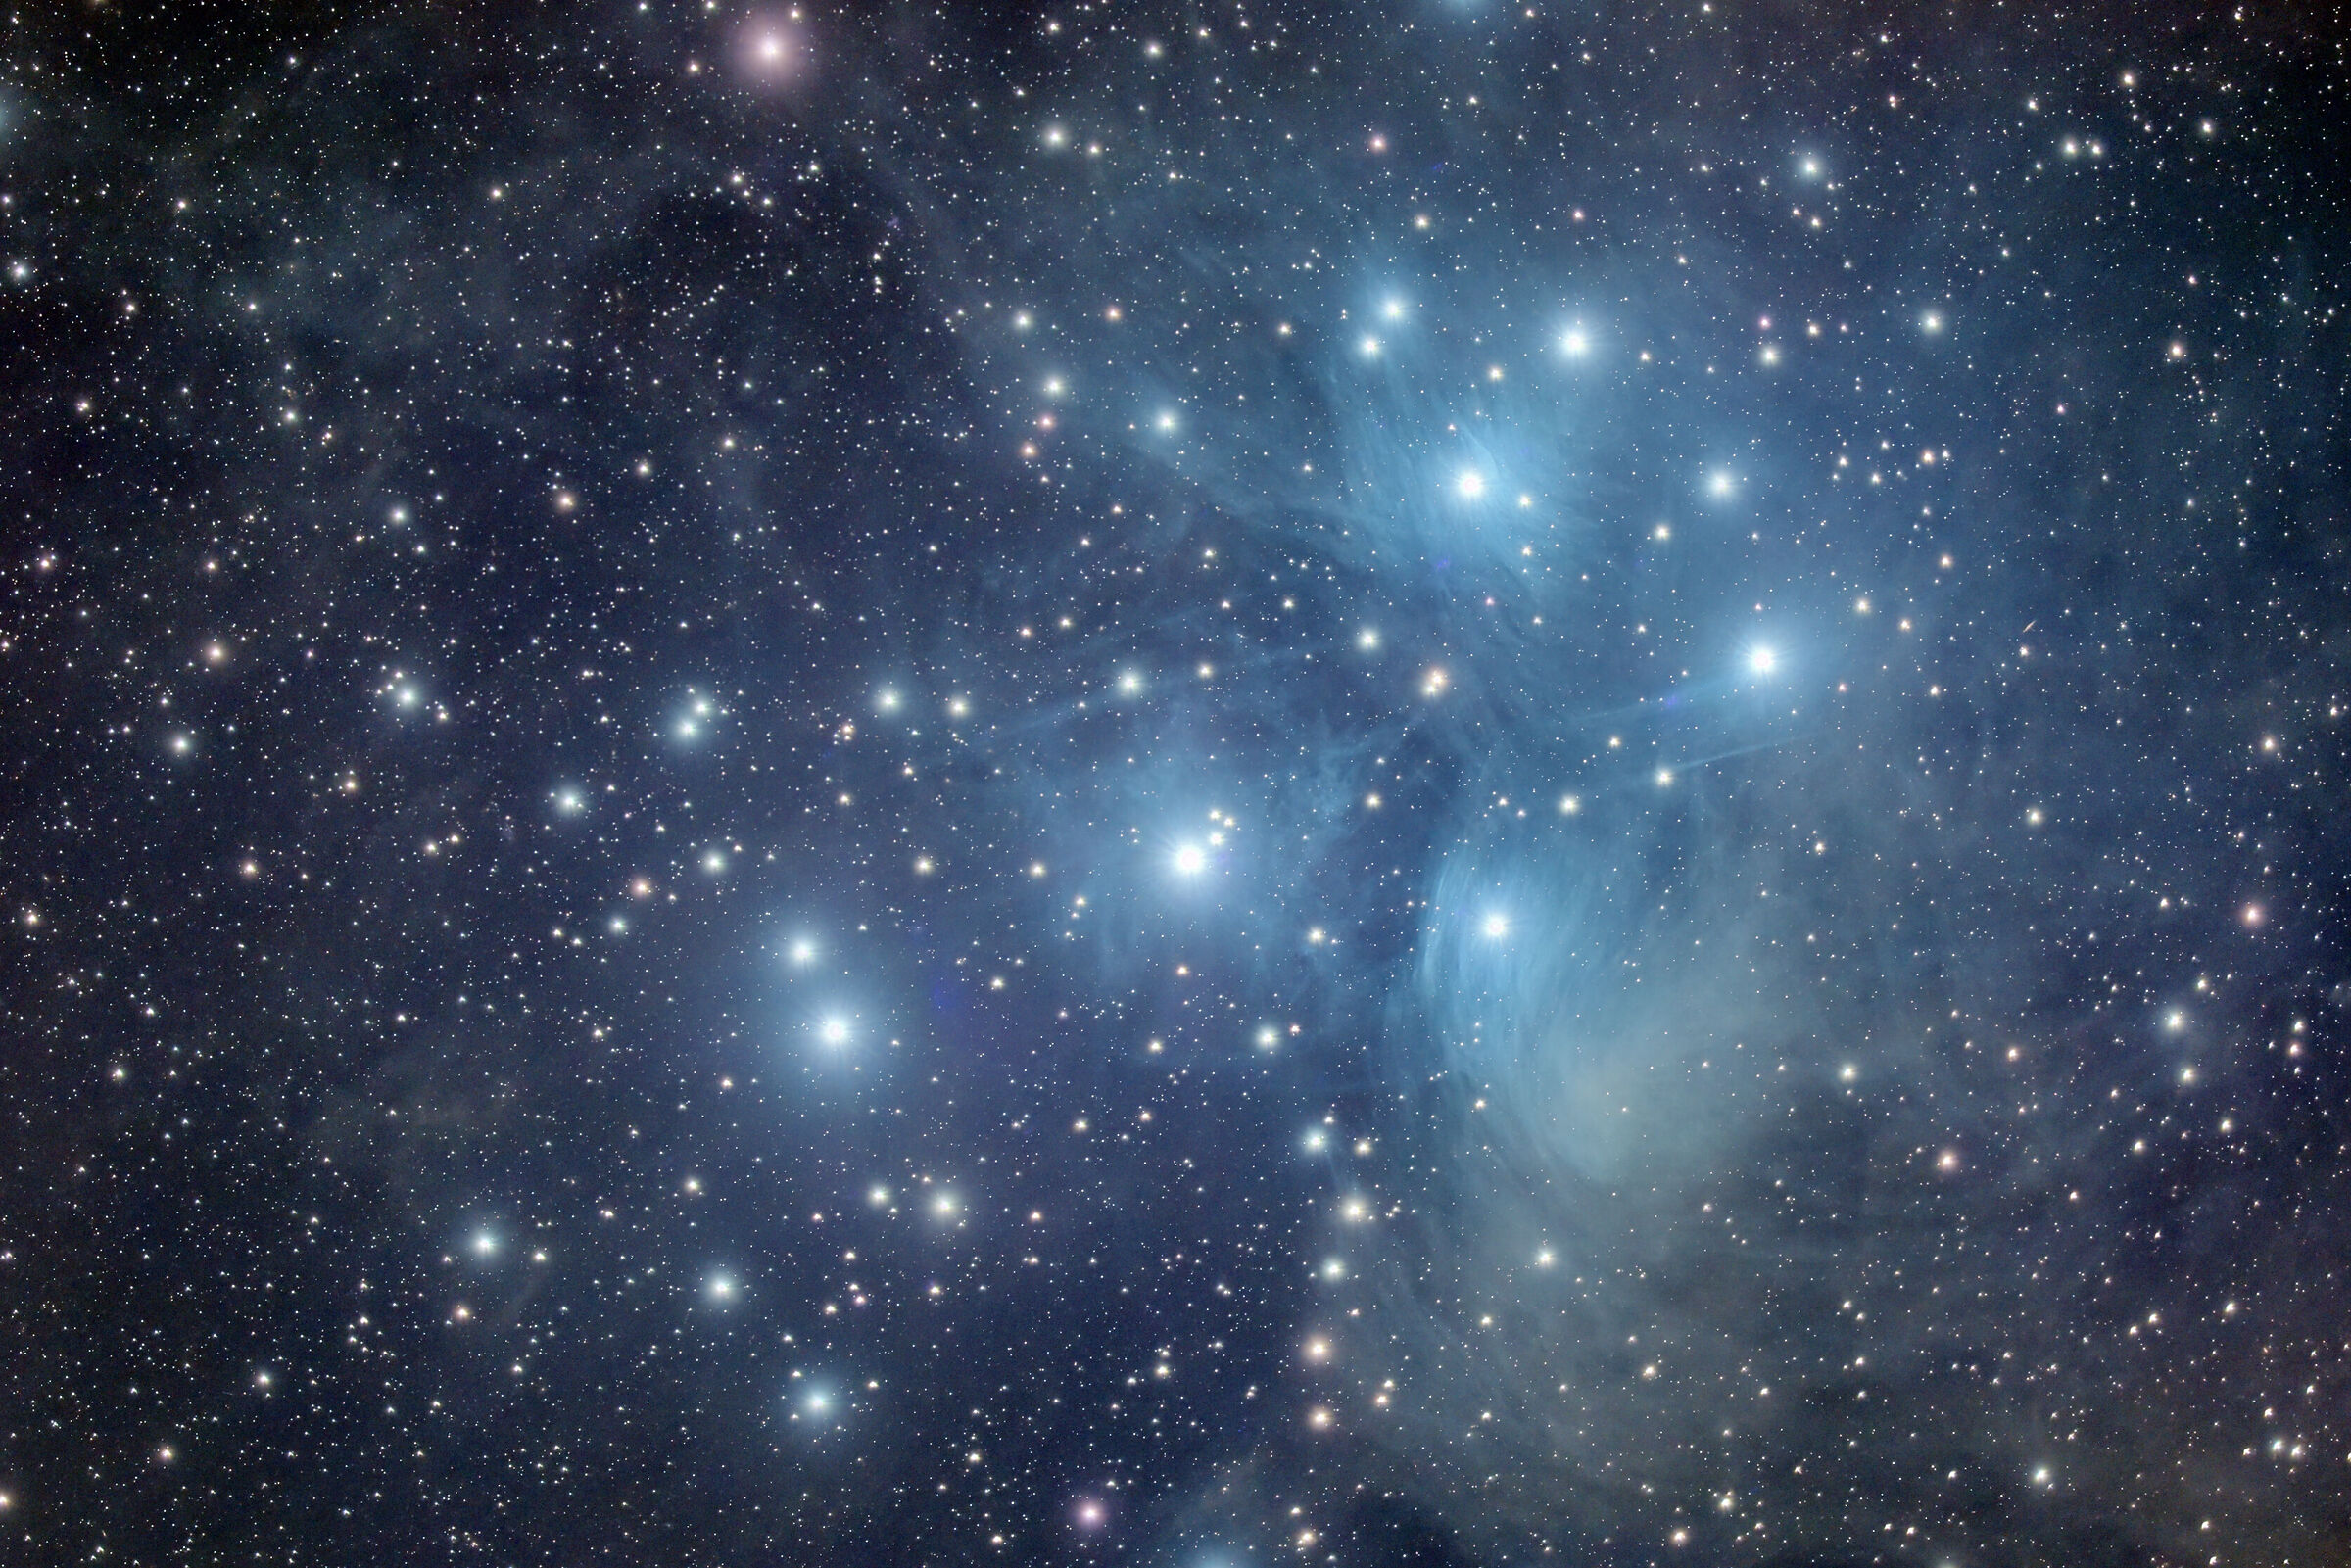 M45 - The Pleiades...